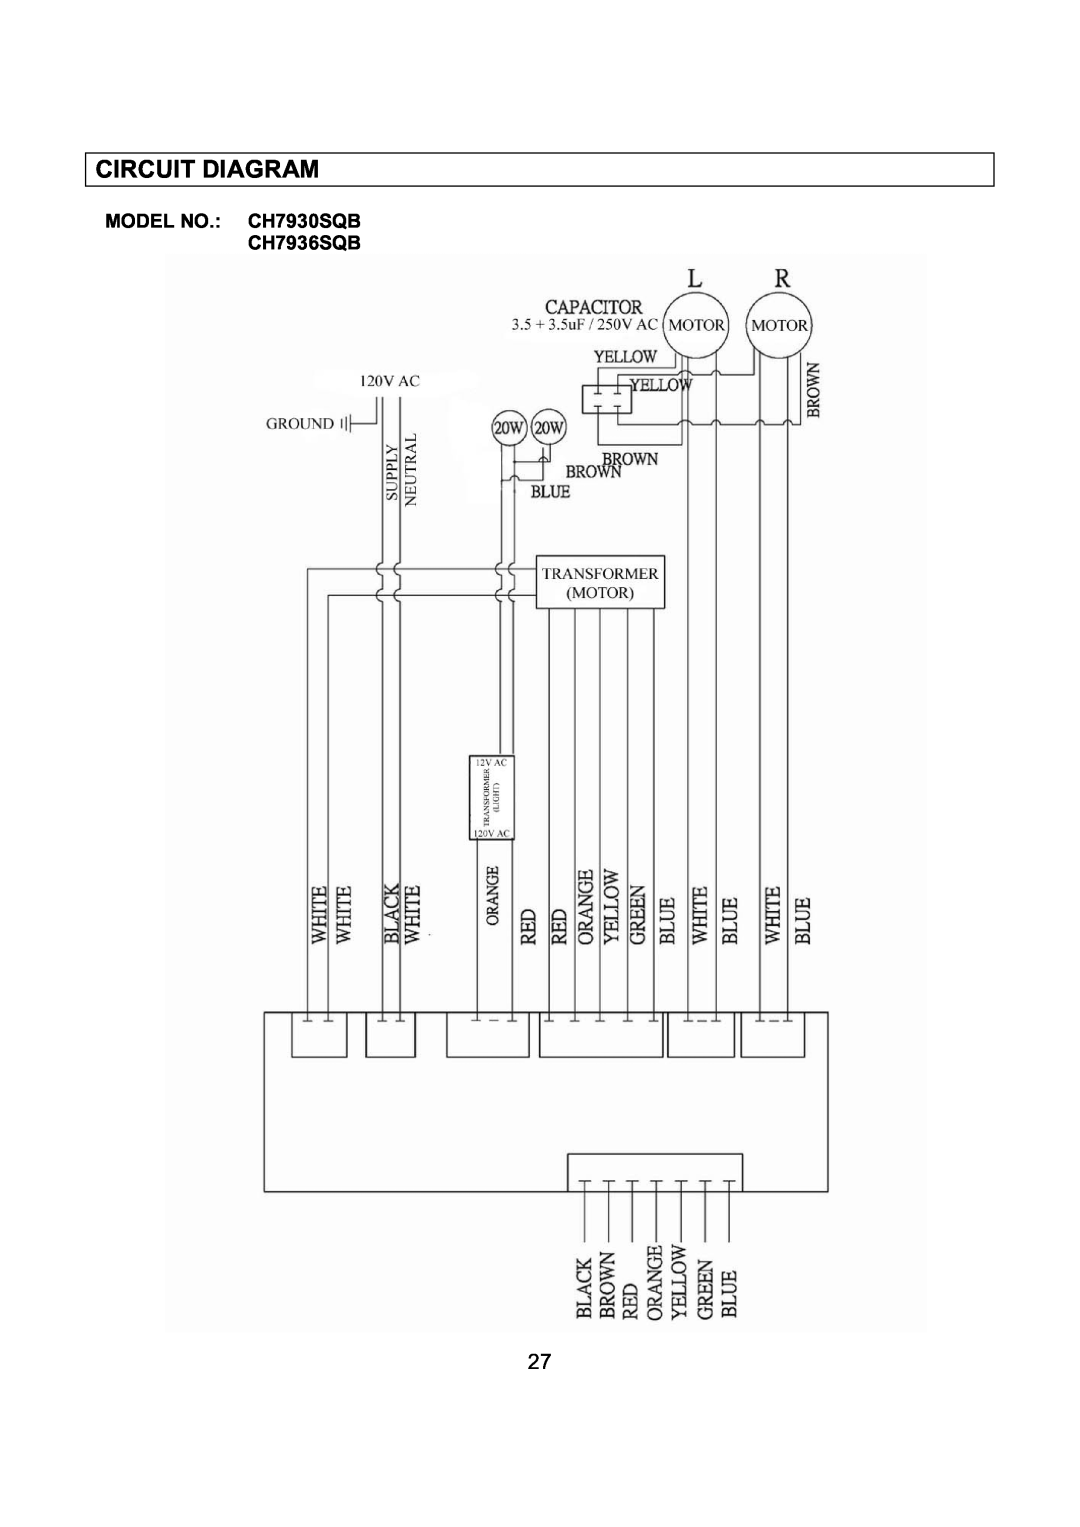 Kobe Range Hoods CH7942SQB, CH7948SQB installation instructions Circuit Diagram, MODEL NO. CH7930SQB CH7936SQB 